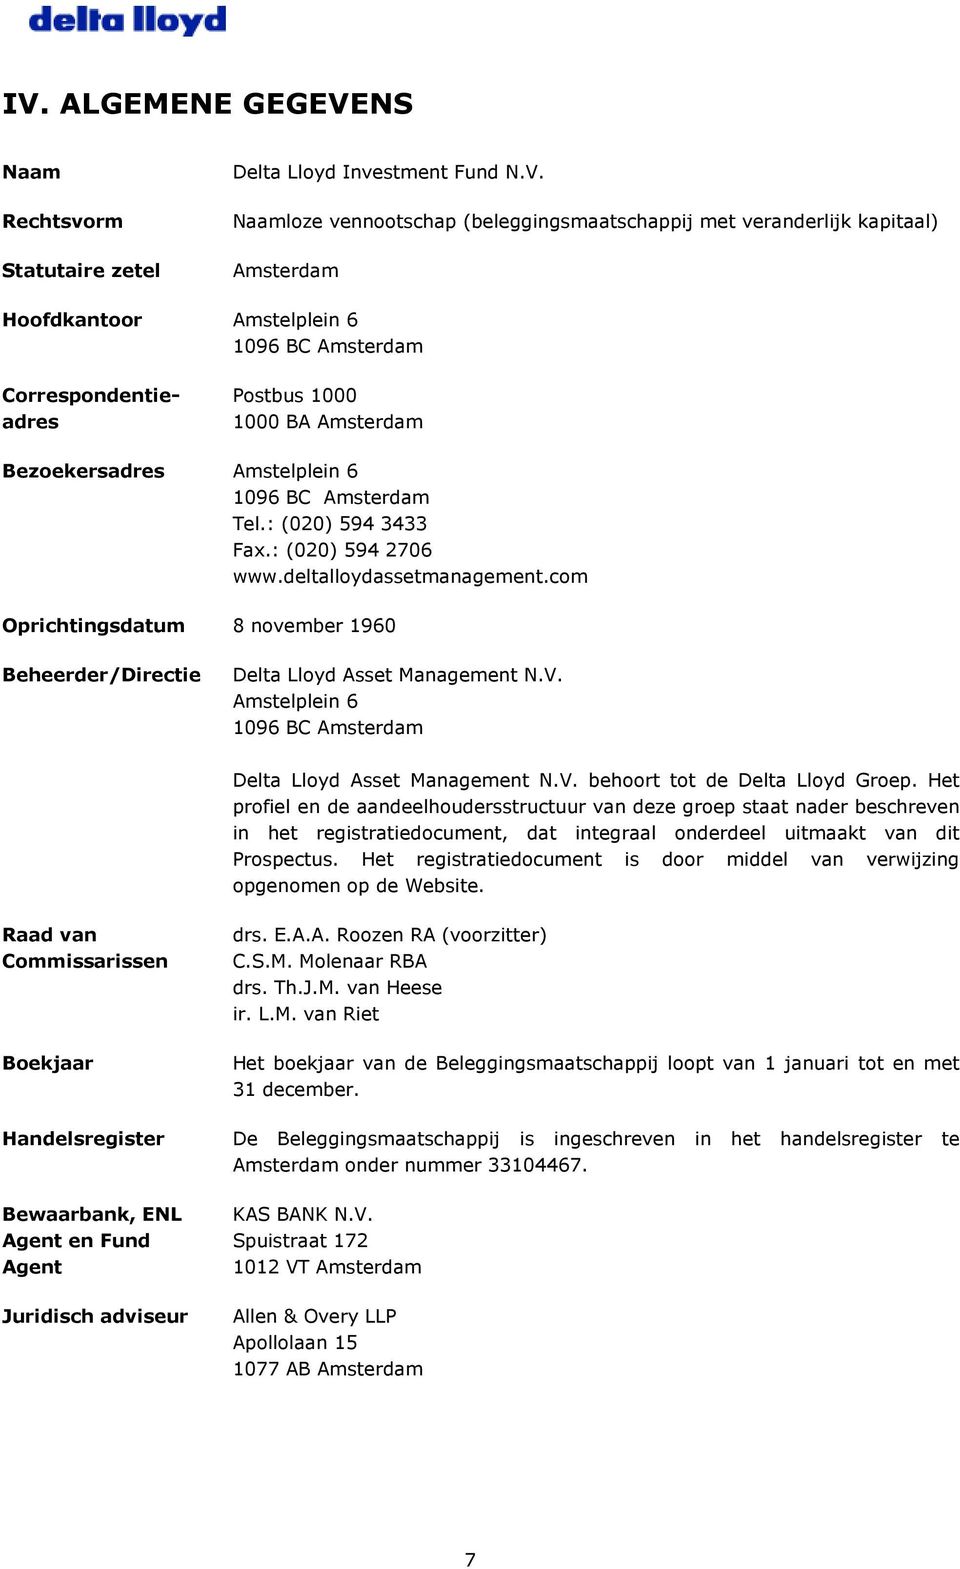 com Oprichtingsdatum 8 november 1960 Beheerder/Directie Delta Lloyd Asset Management N.V. Amstelplein 6 1096 BC Amsterdam Delta Lloyd Asset Management N.V. behoort tot de Delta Lloyd Groep.